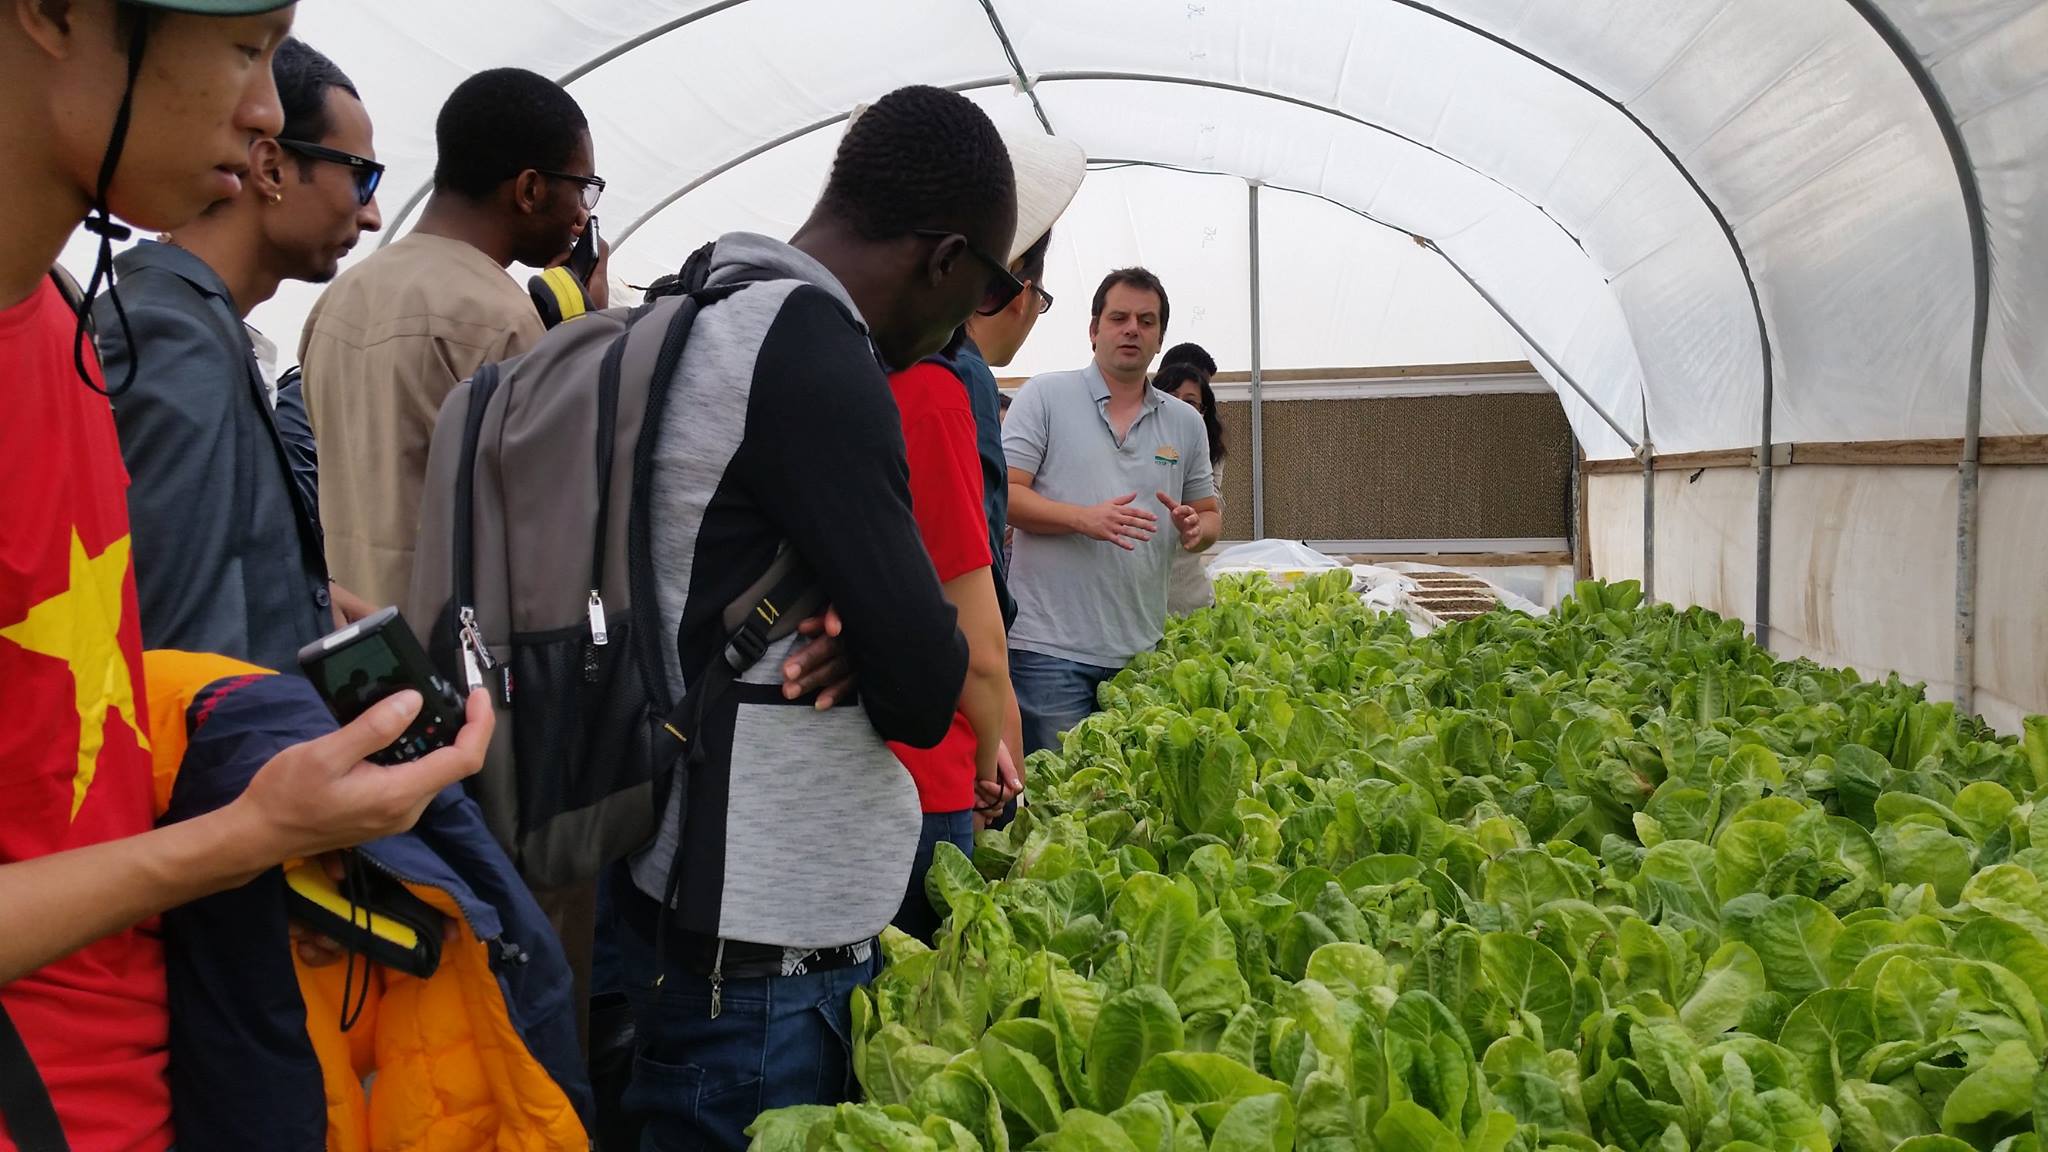 AICAT students learning from an Israeli farmer. Photo: courtesy